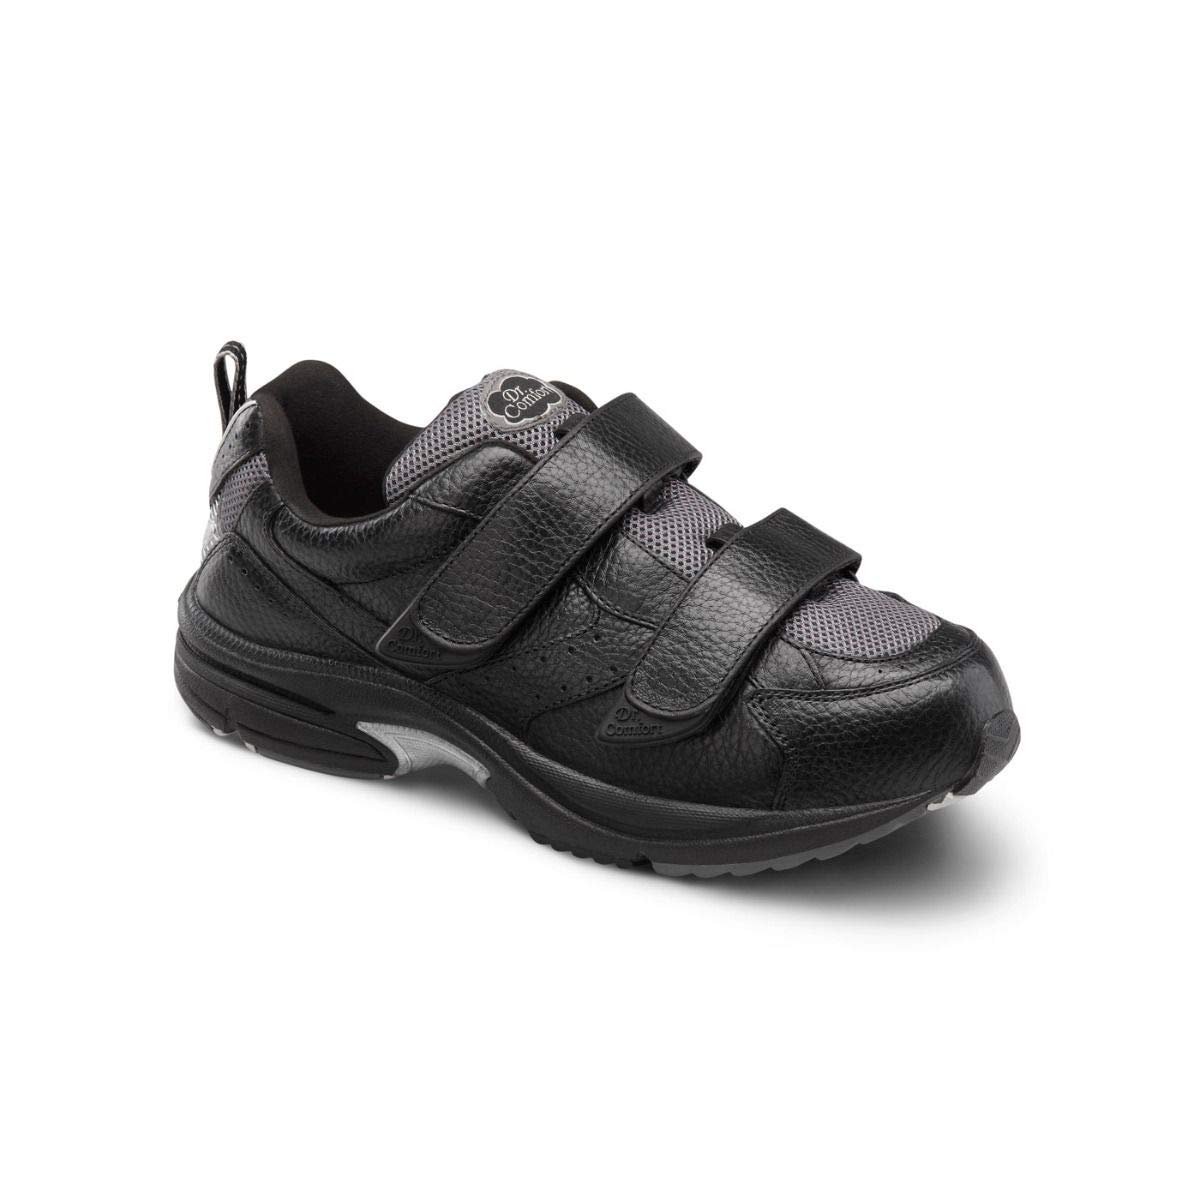 Dr. Comfort Men's Shoes 7710-X-10.5 Leather Low Top , Black, Size 10.5 ...